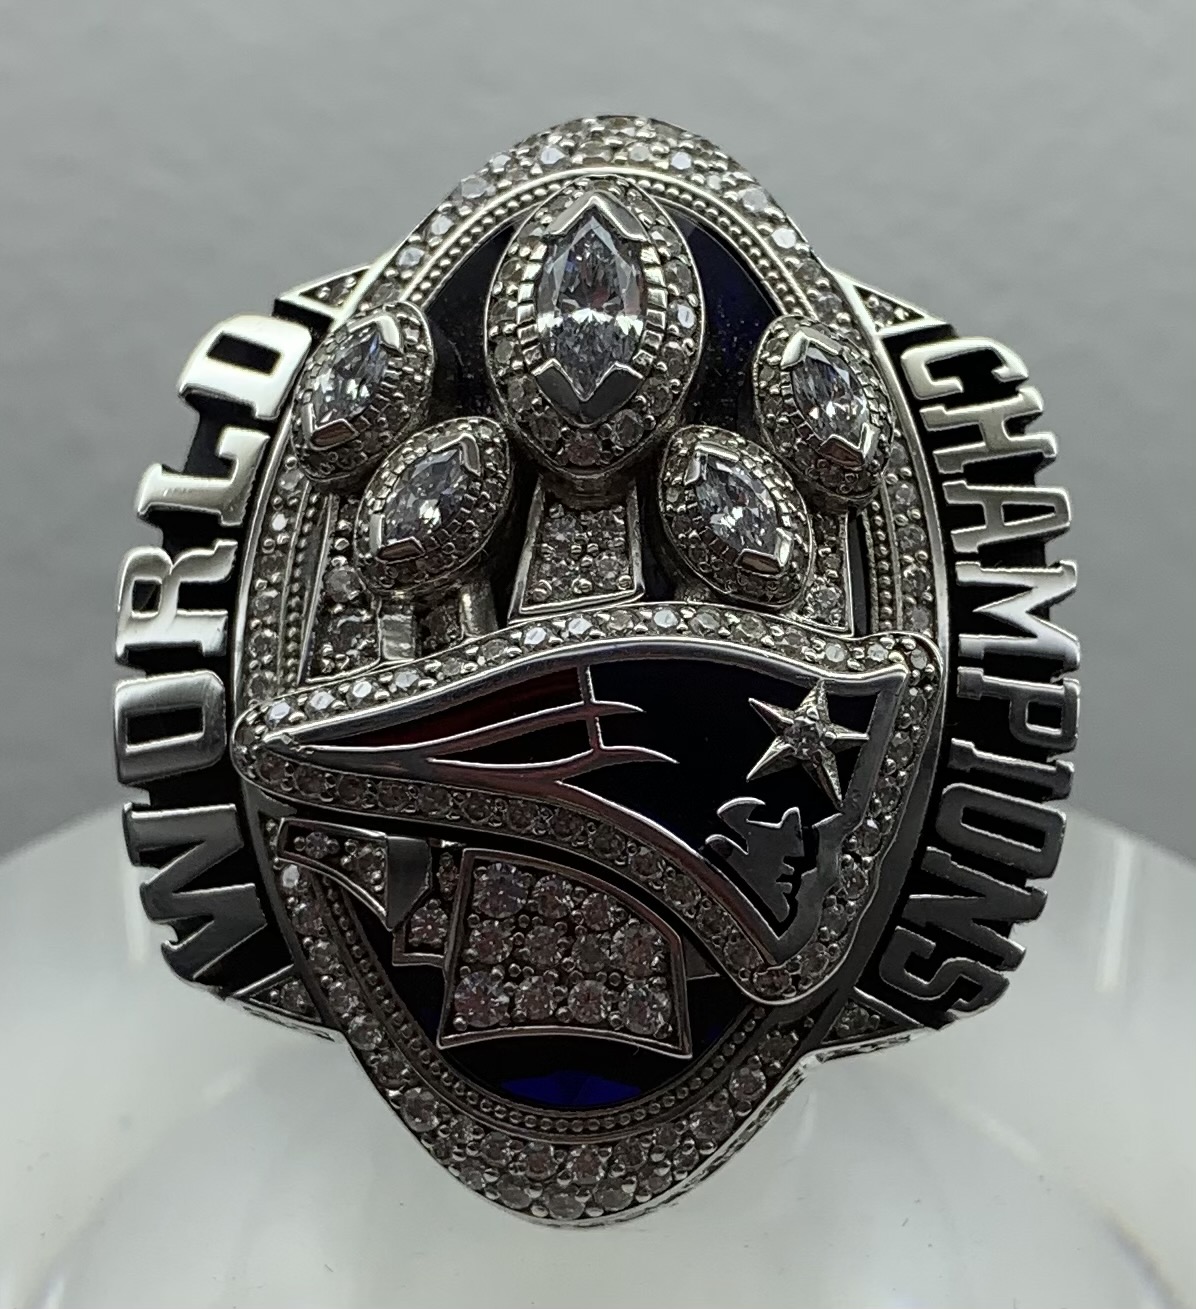 Super Bowl ring - Wikipedia